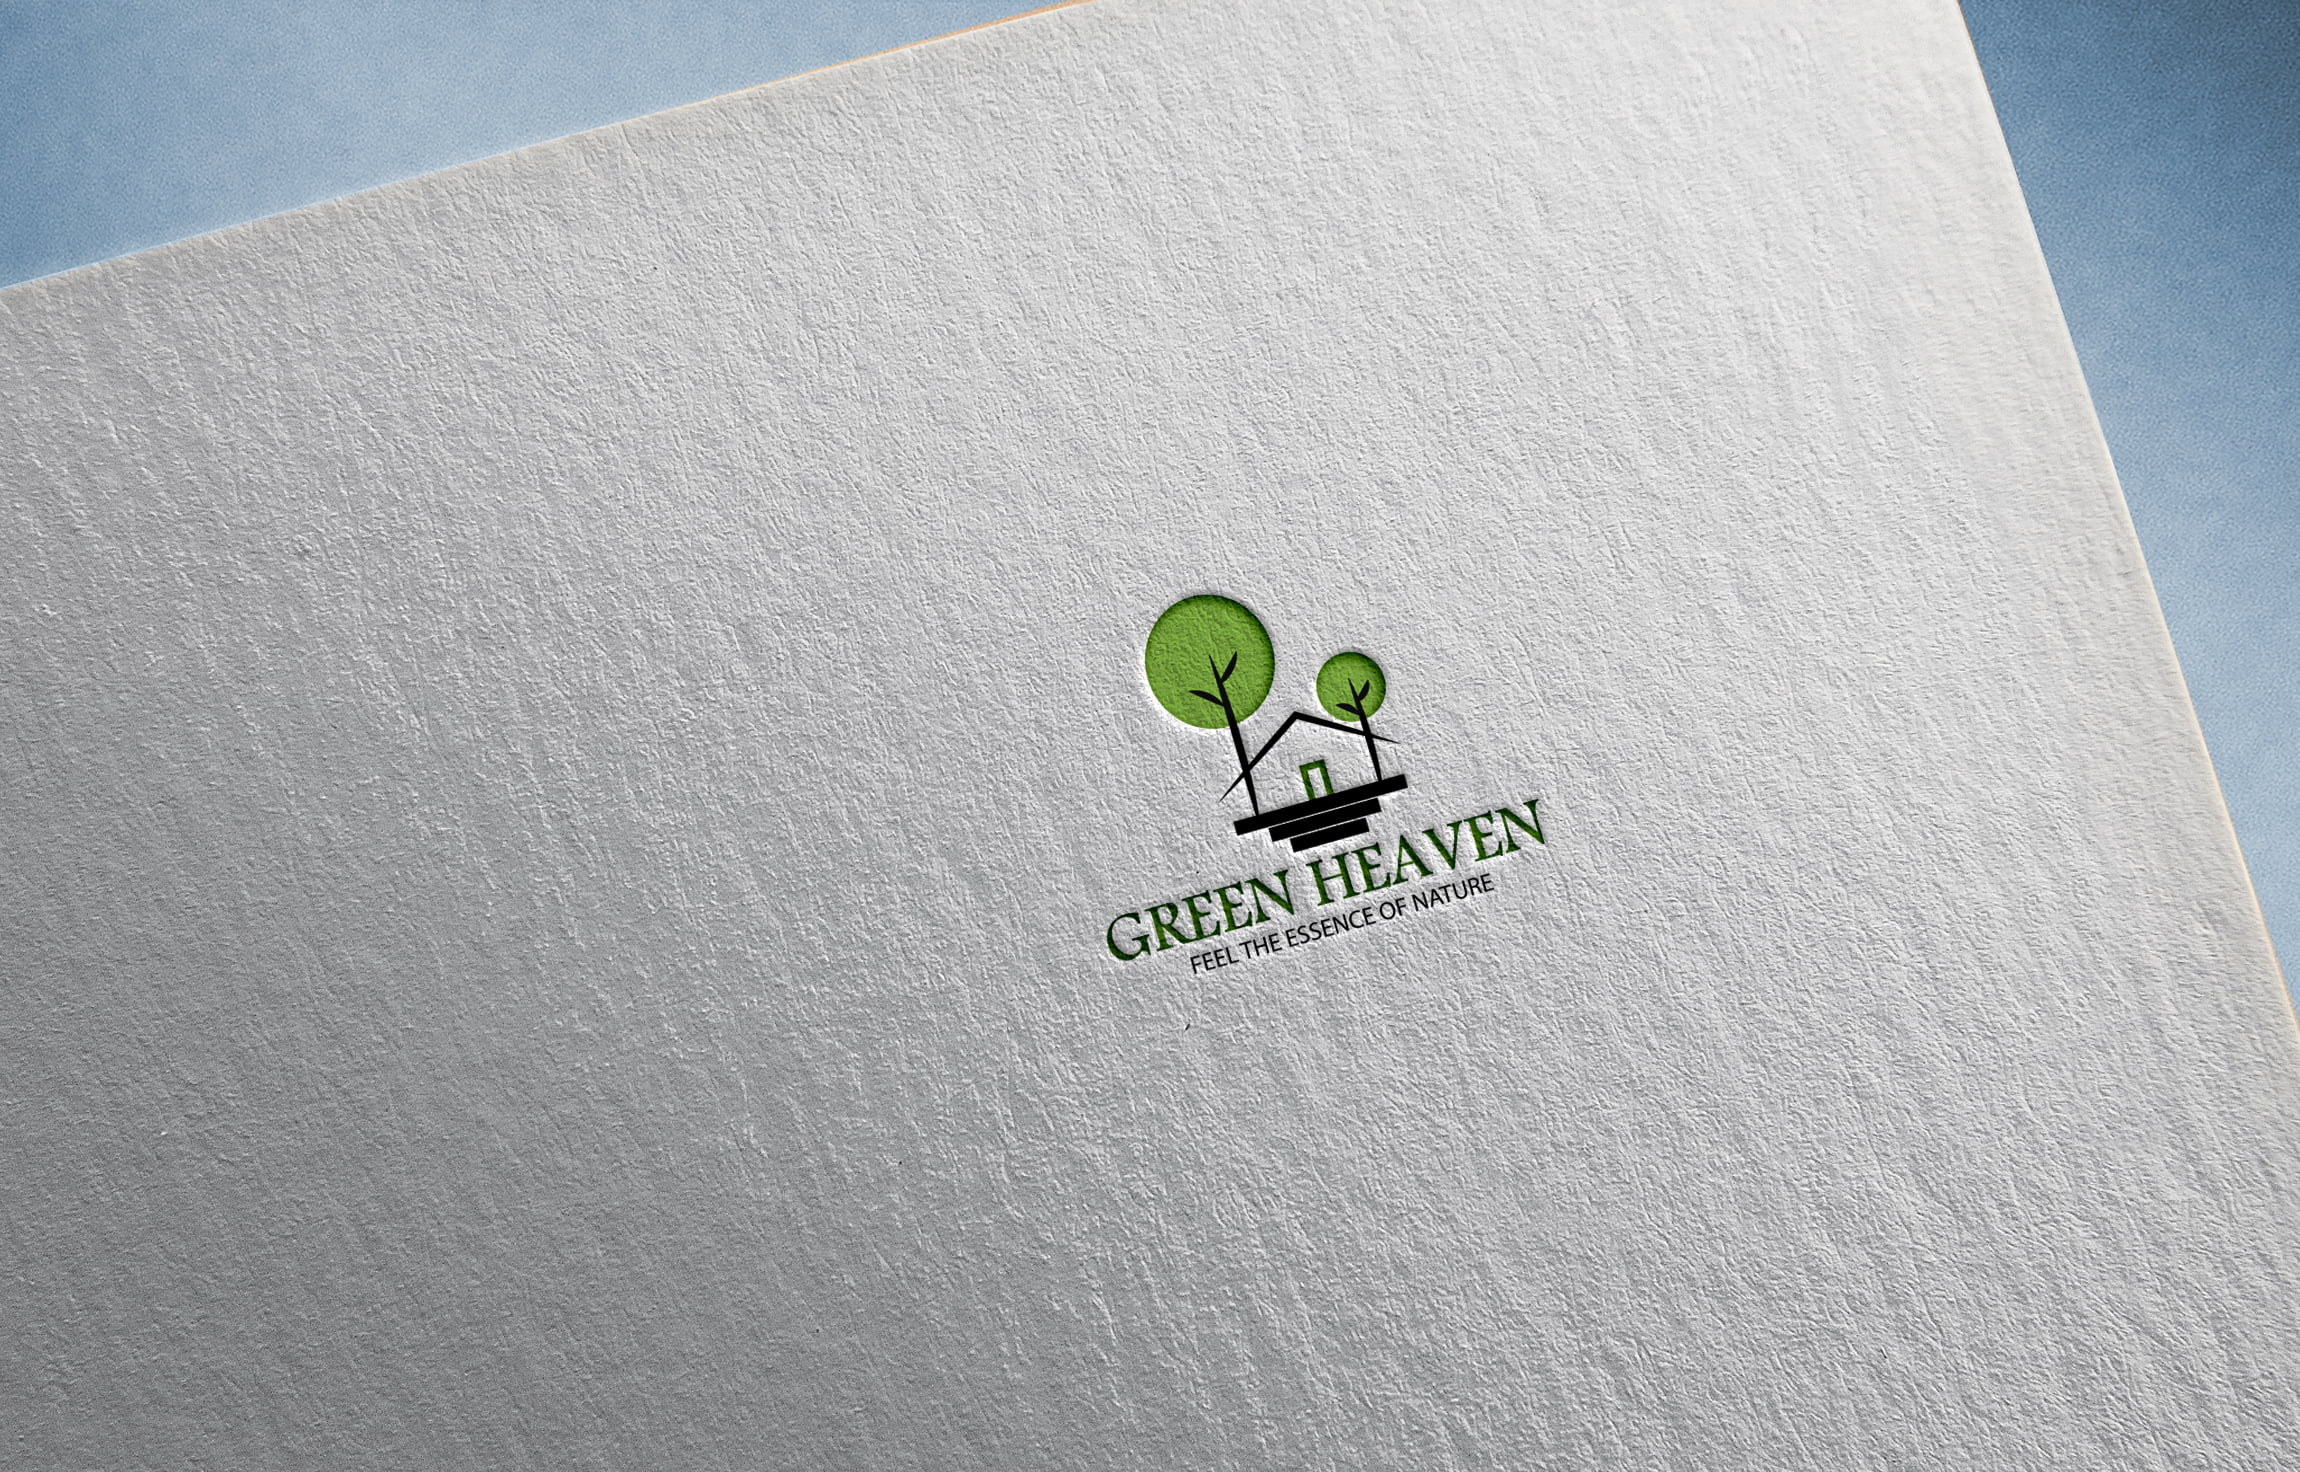 green-heaven-resort-logo-paper-pressed-mockup